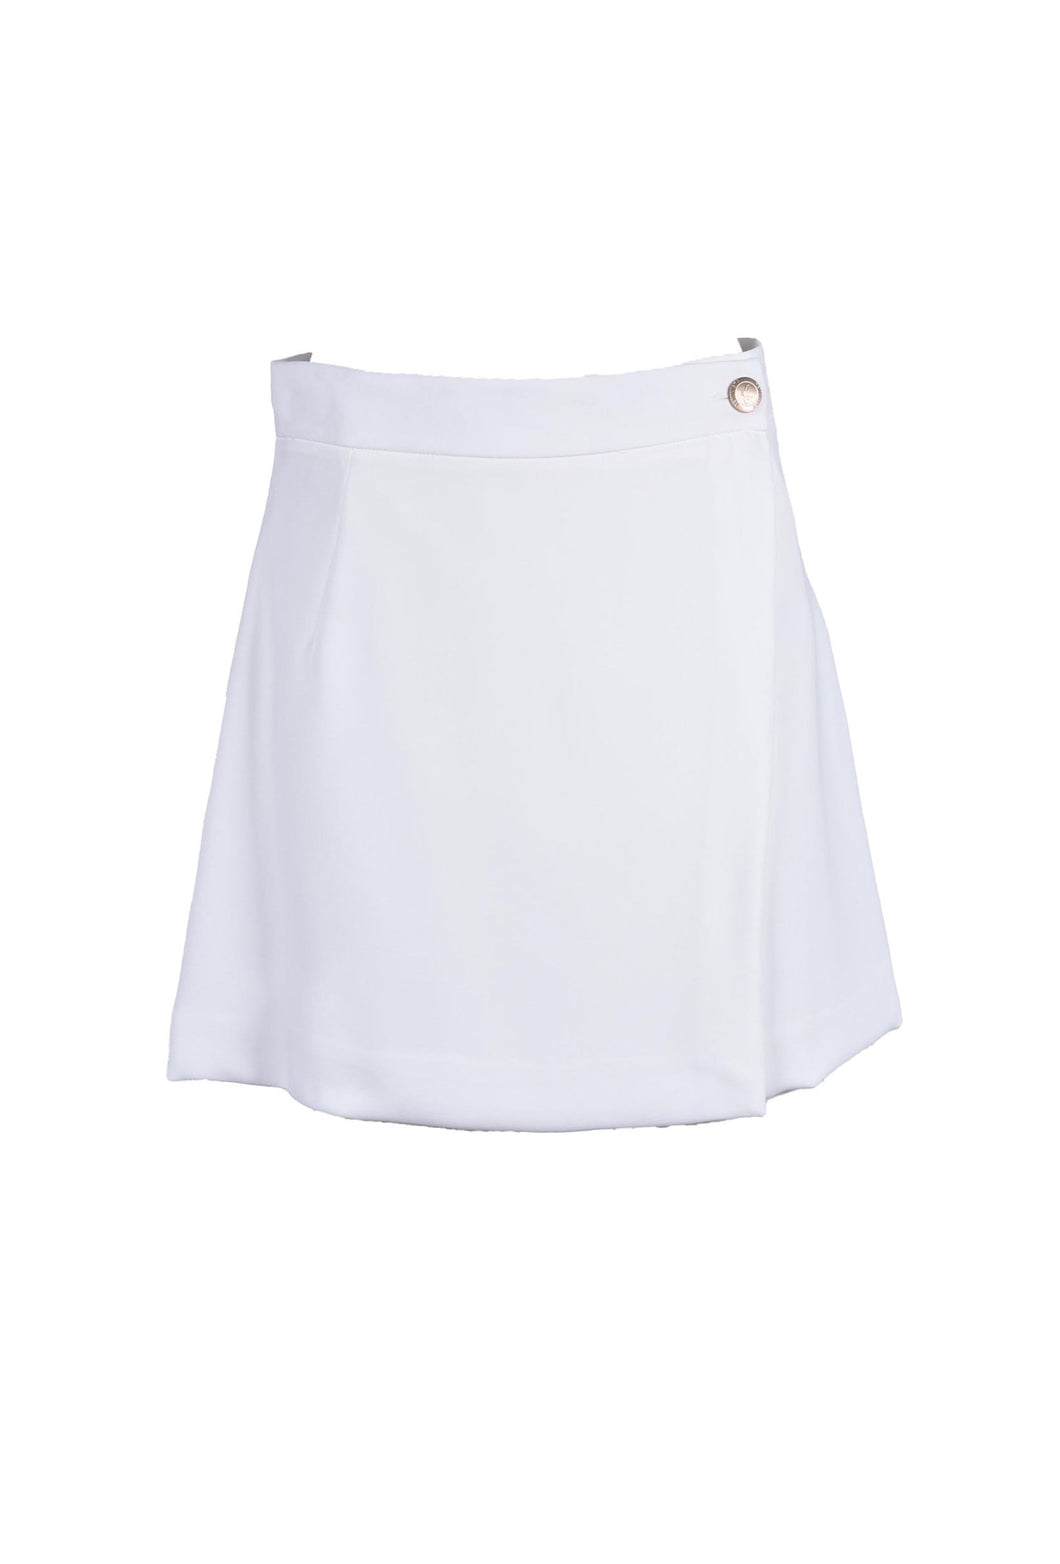 Feminista White Mini Skirt - Choose your size